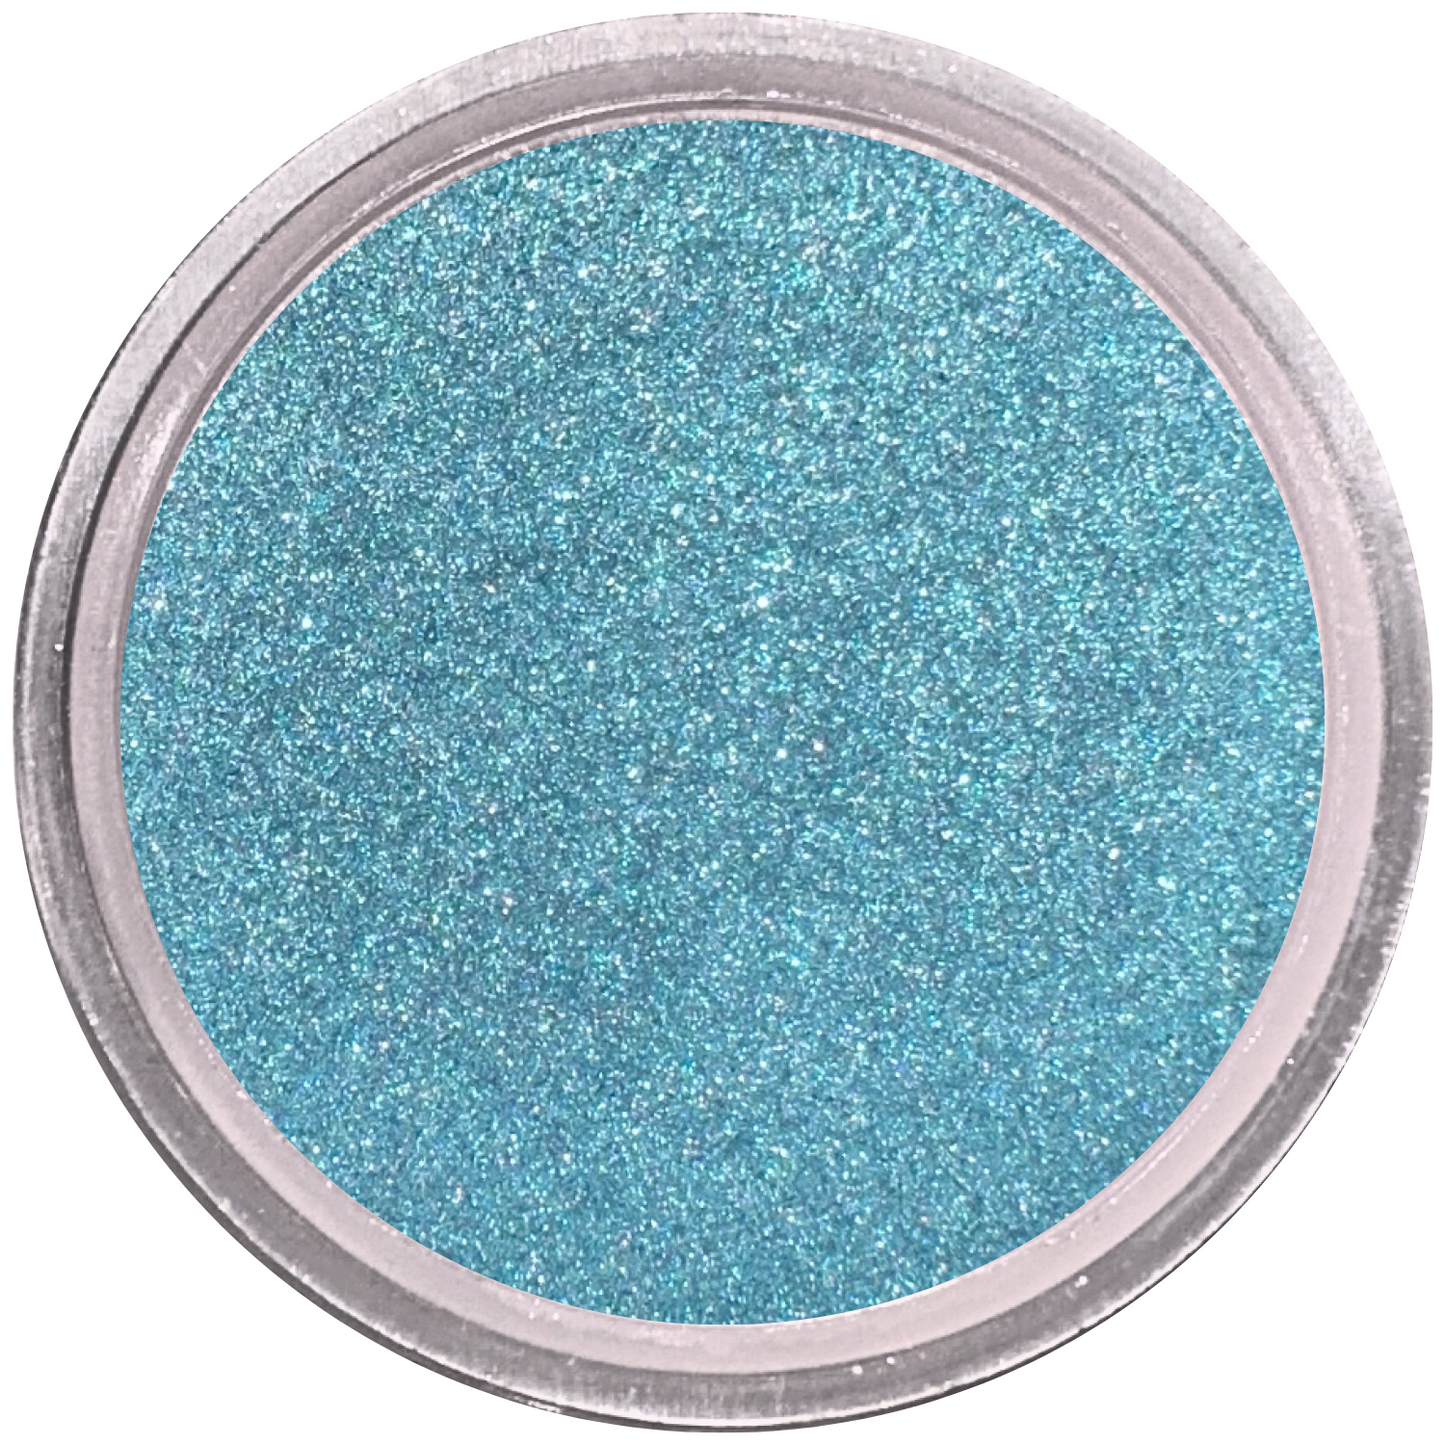 Teal Blue Loose Powder Mineral Eyeshadow Single 3g